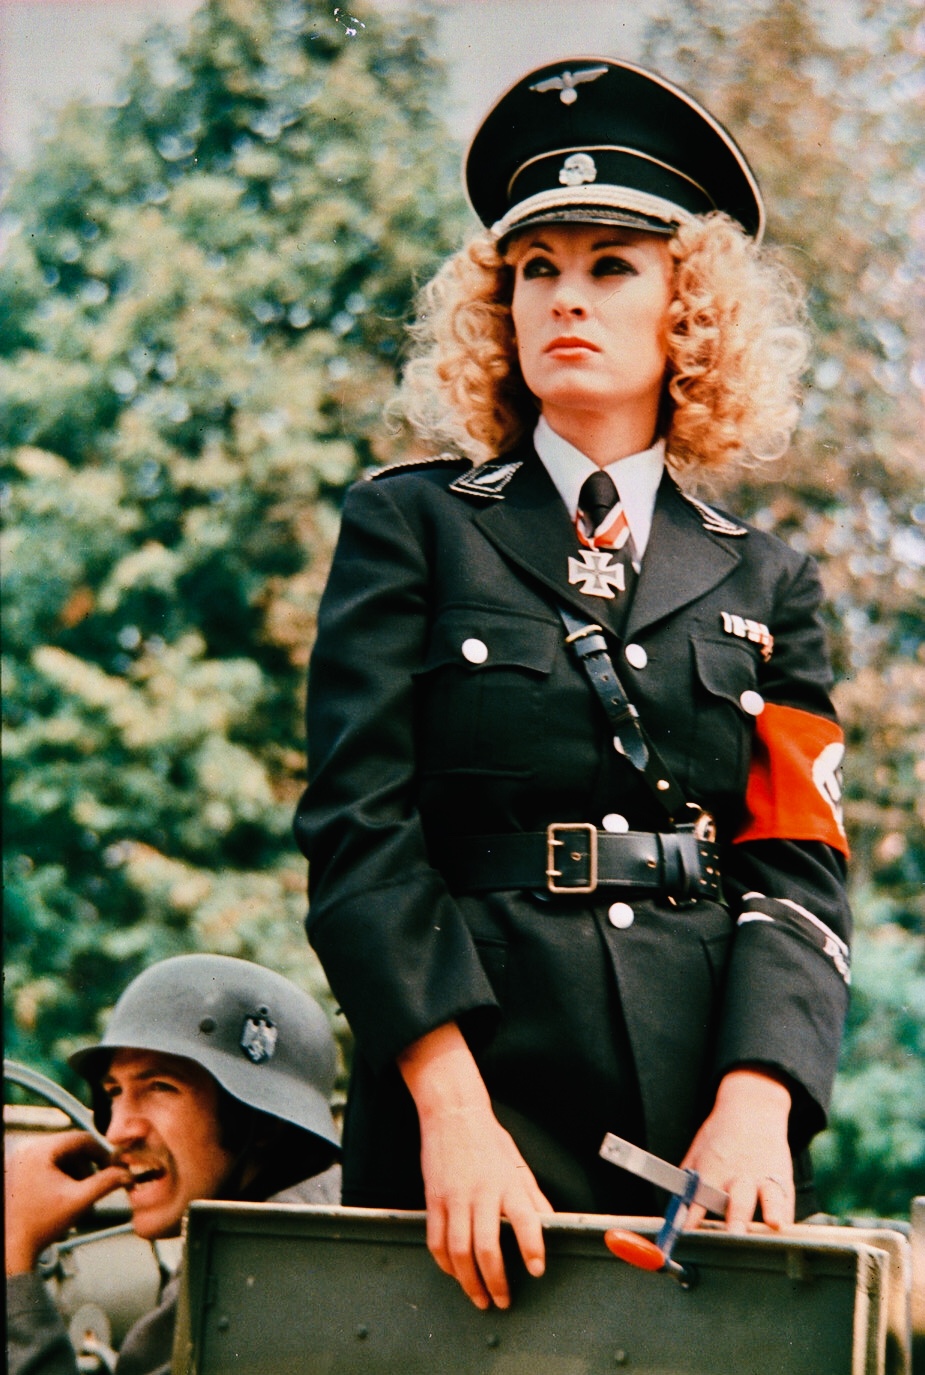 Nazi german women